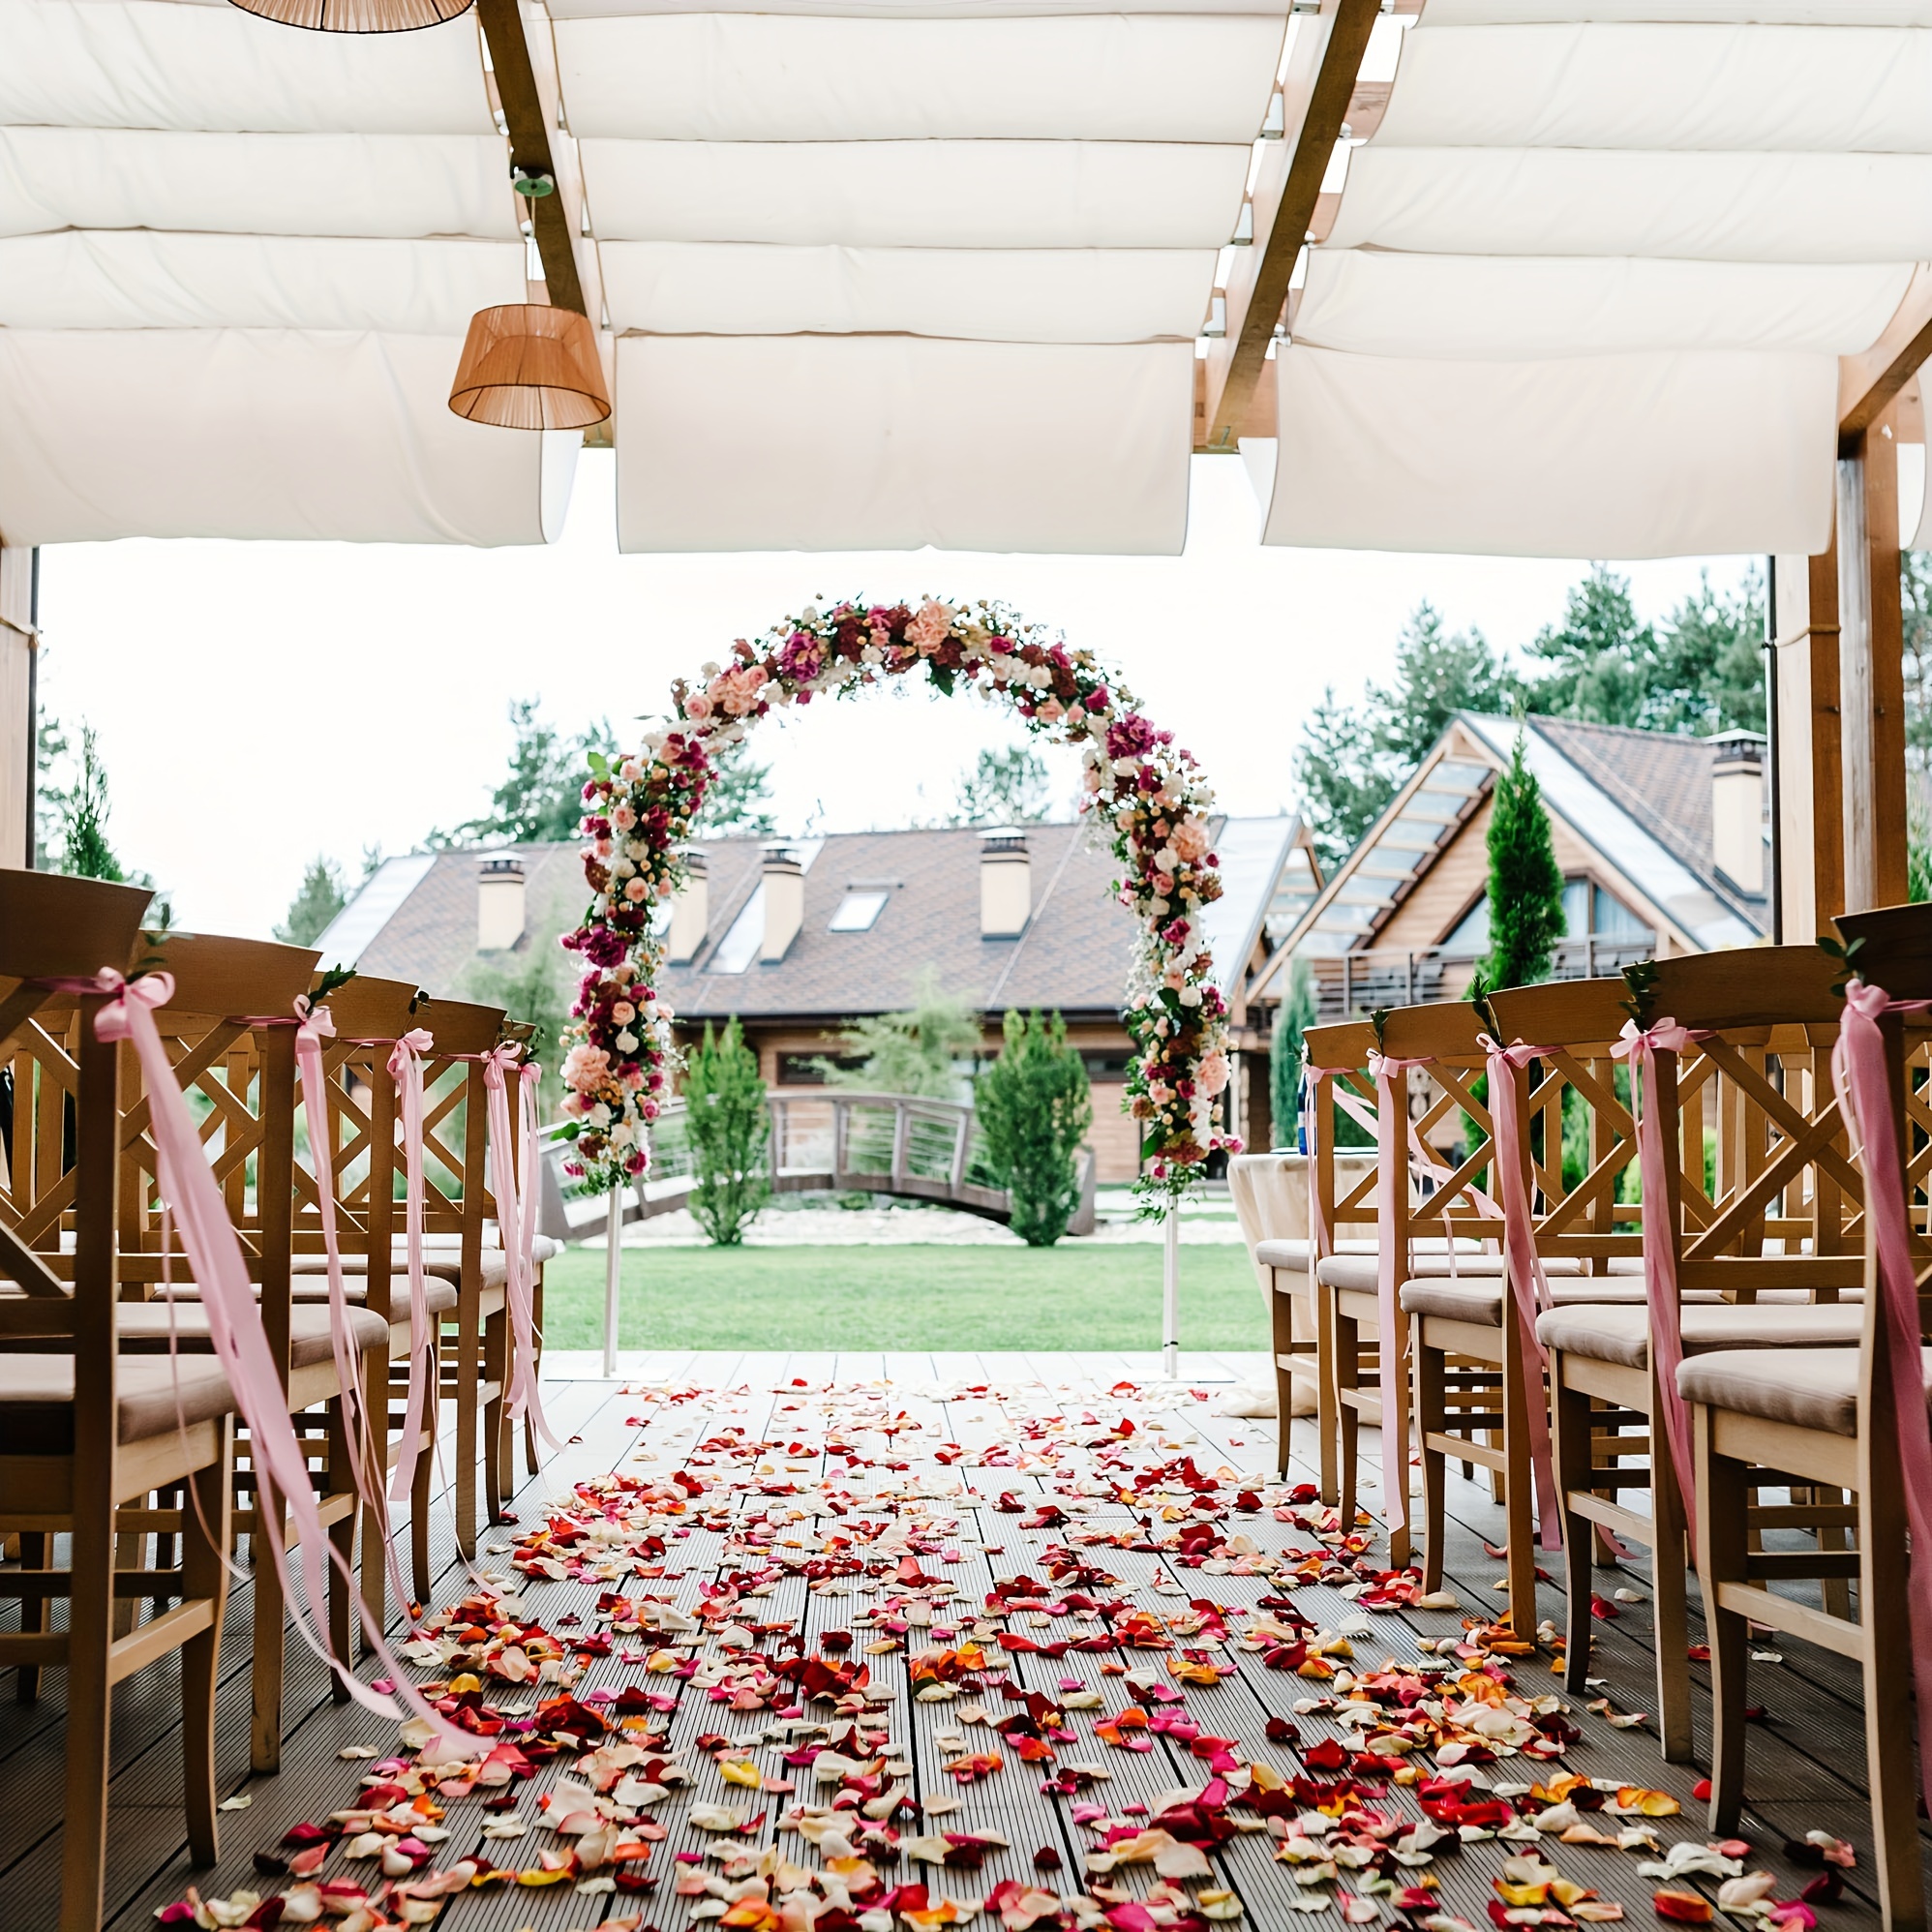 

1000 Pieces Artificial Fake Rose Petals Wedding Party Decorations